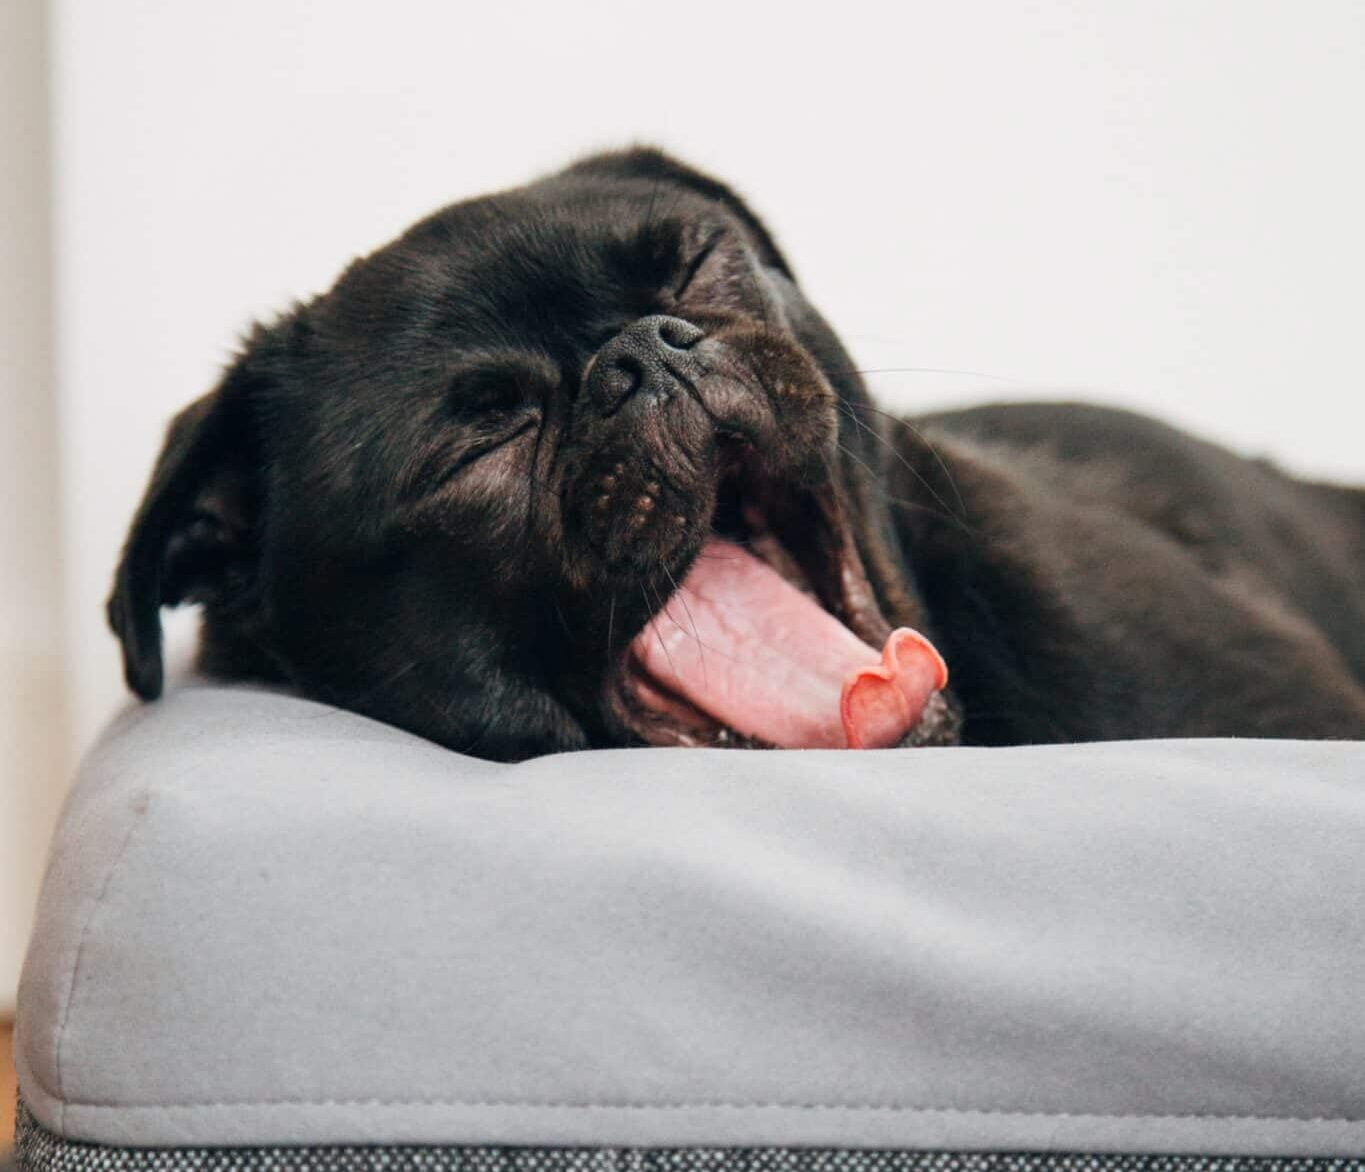 A pug yawning